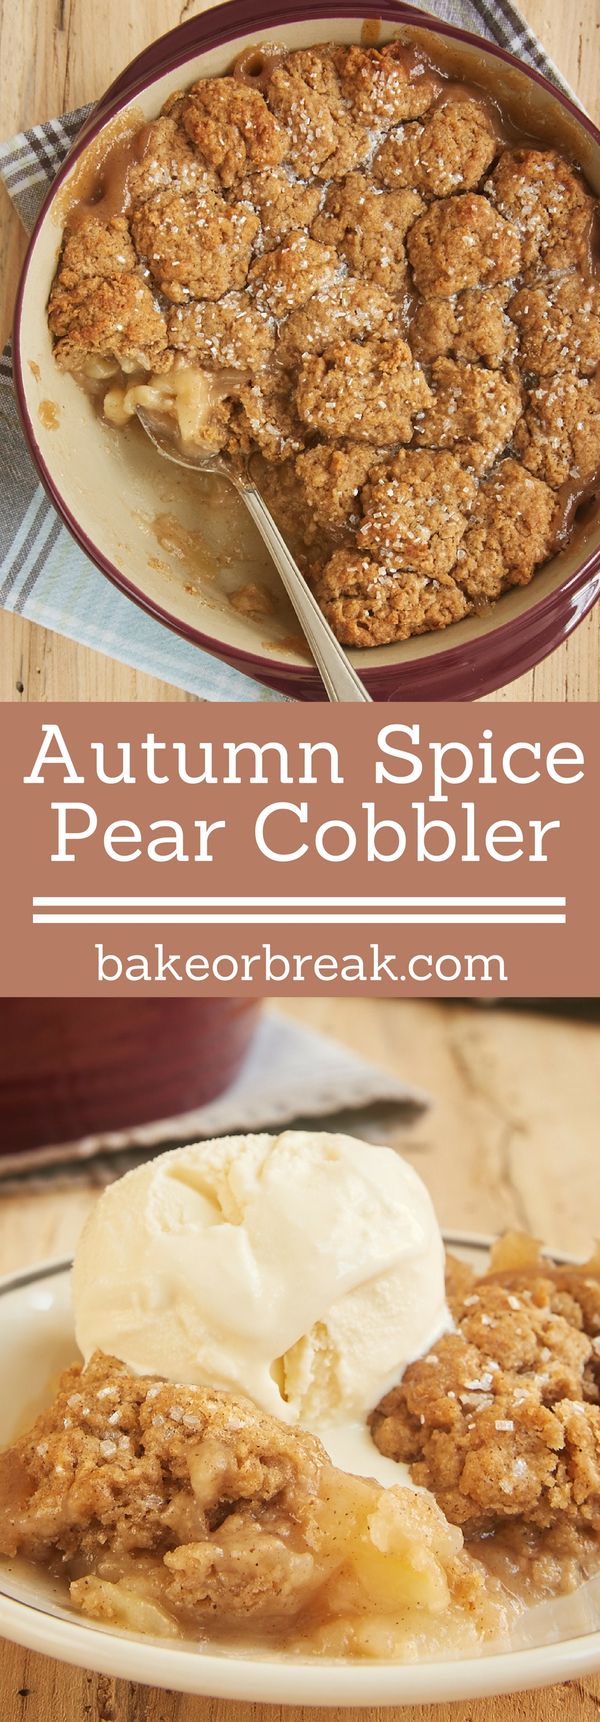 Autumn Spice Pear Cobbler